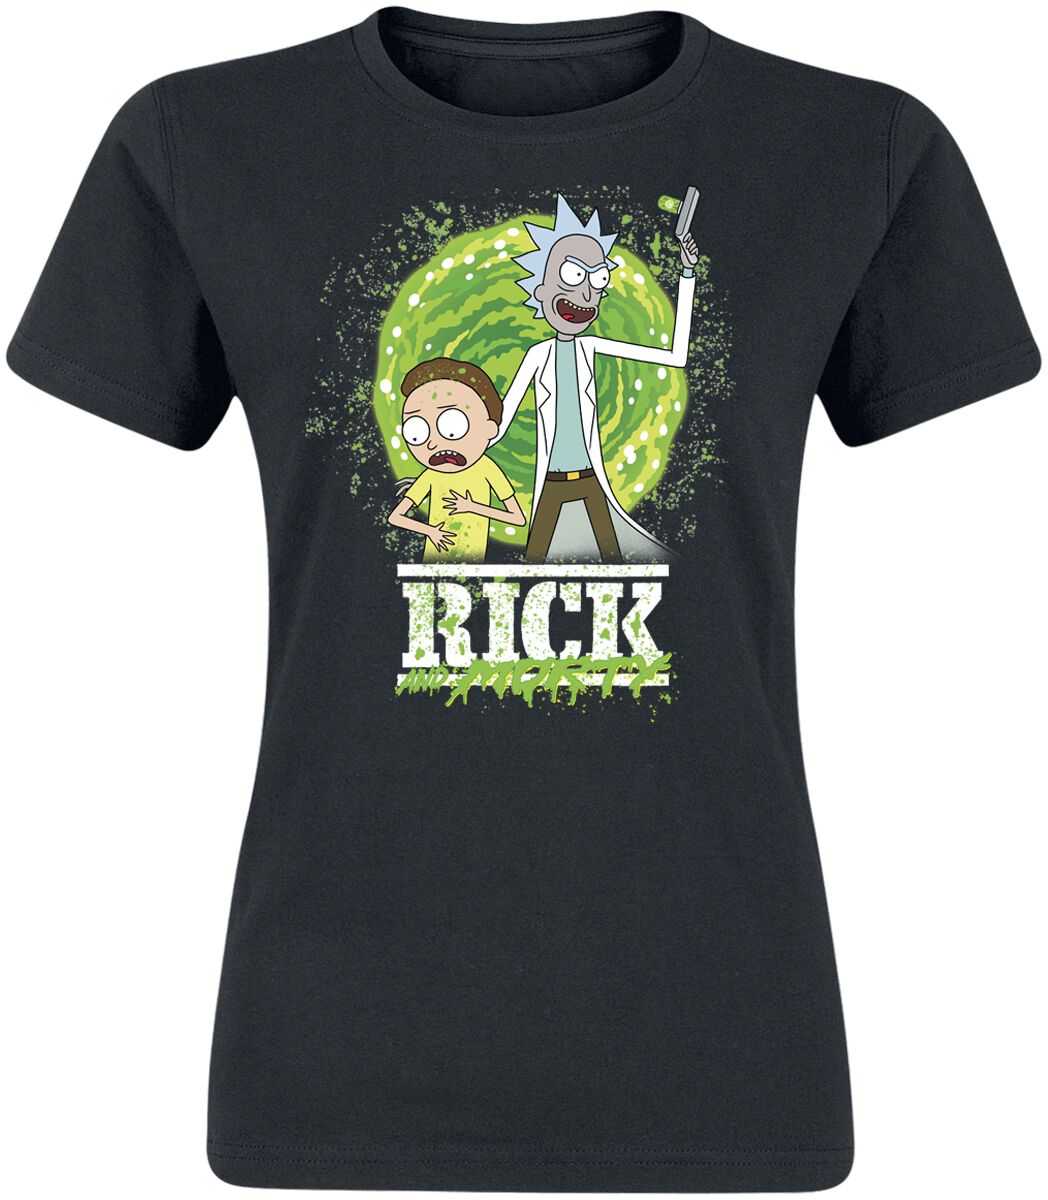 Rick And Morty Season 6 T-Shirt schwarz in M